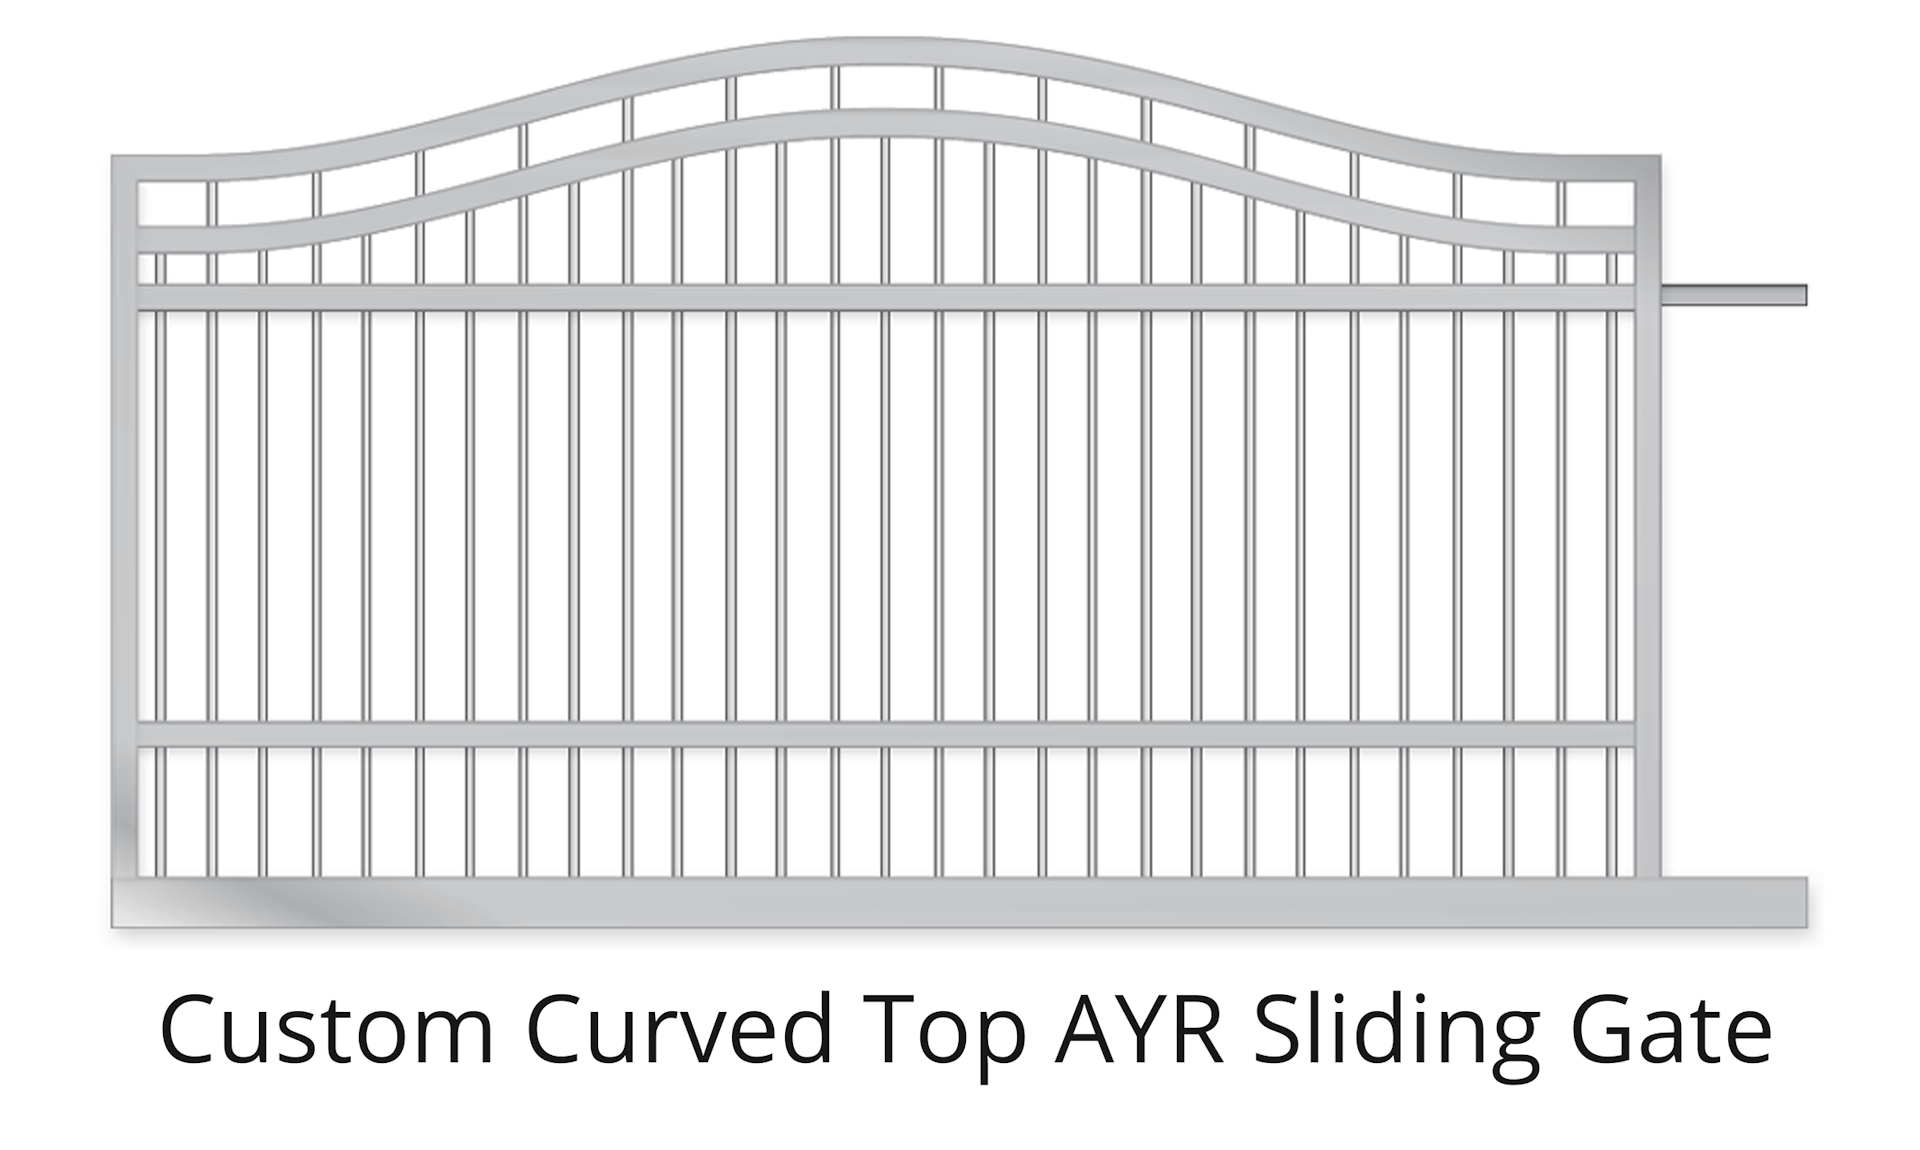 Custom curved top AYR sliding gate